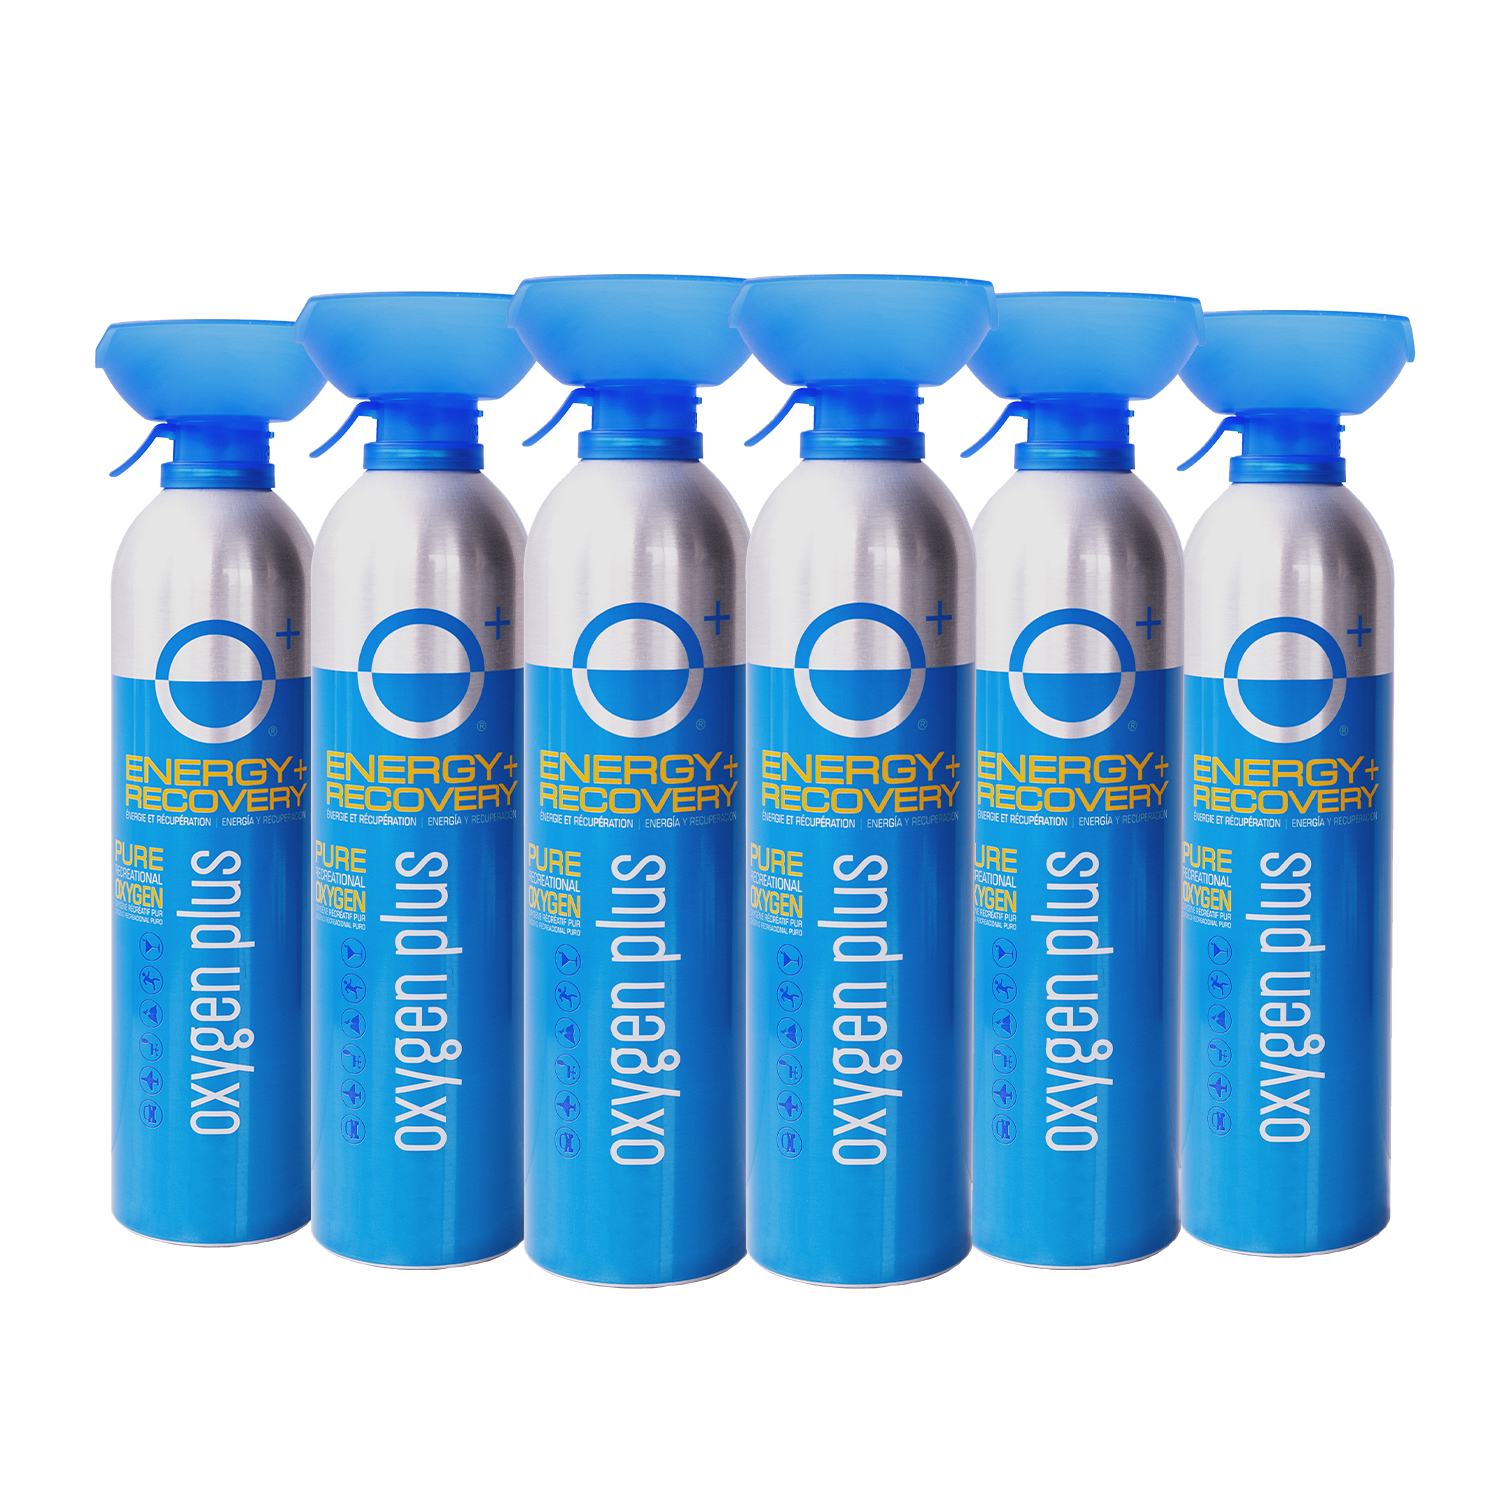 O+ Biggi – 6-pack – 11 Liters, 220+ Breaths Per Canister